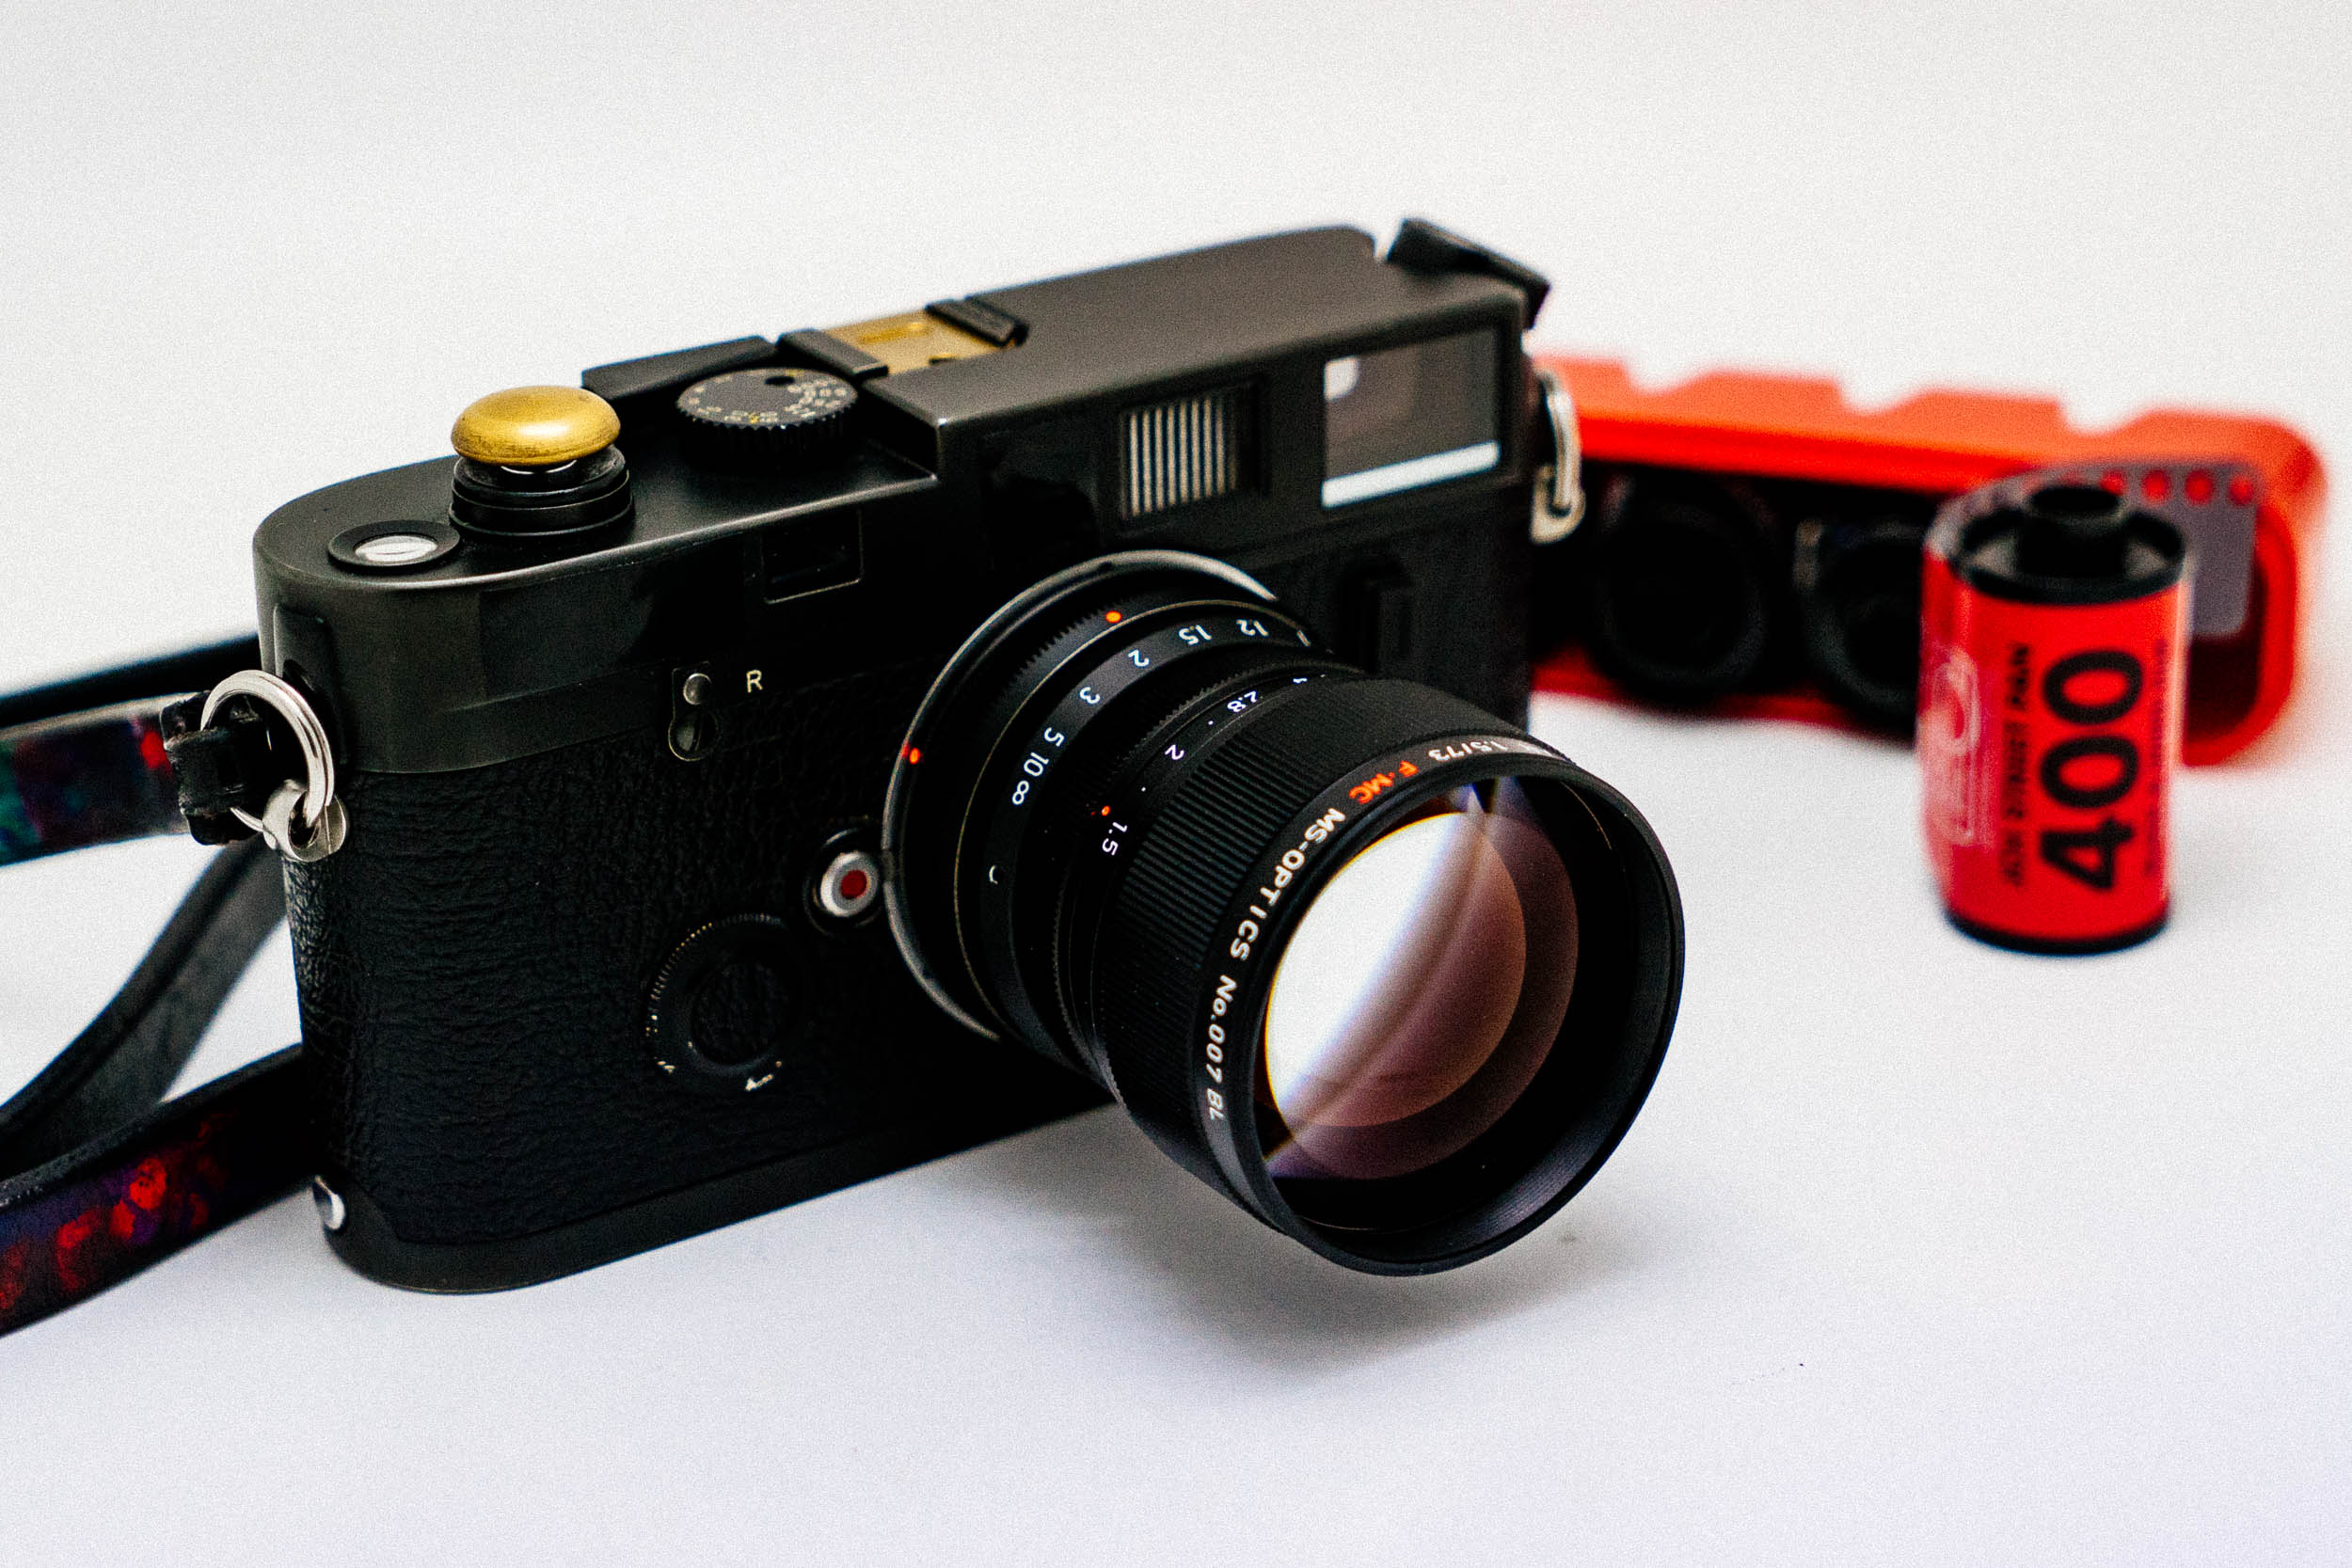 Camera Geekery: MS Optics Sonnetar 73mm f1.5 FMC